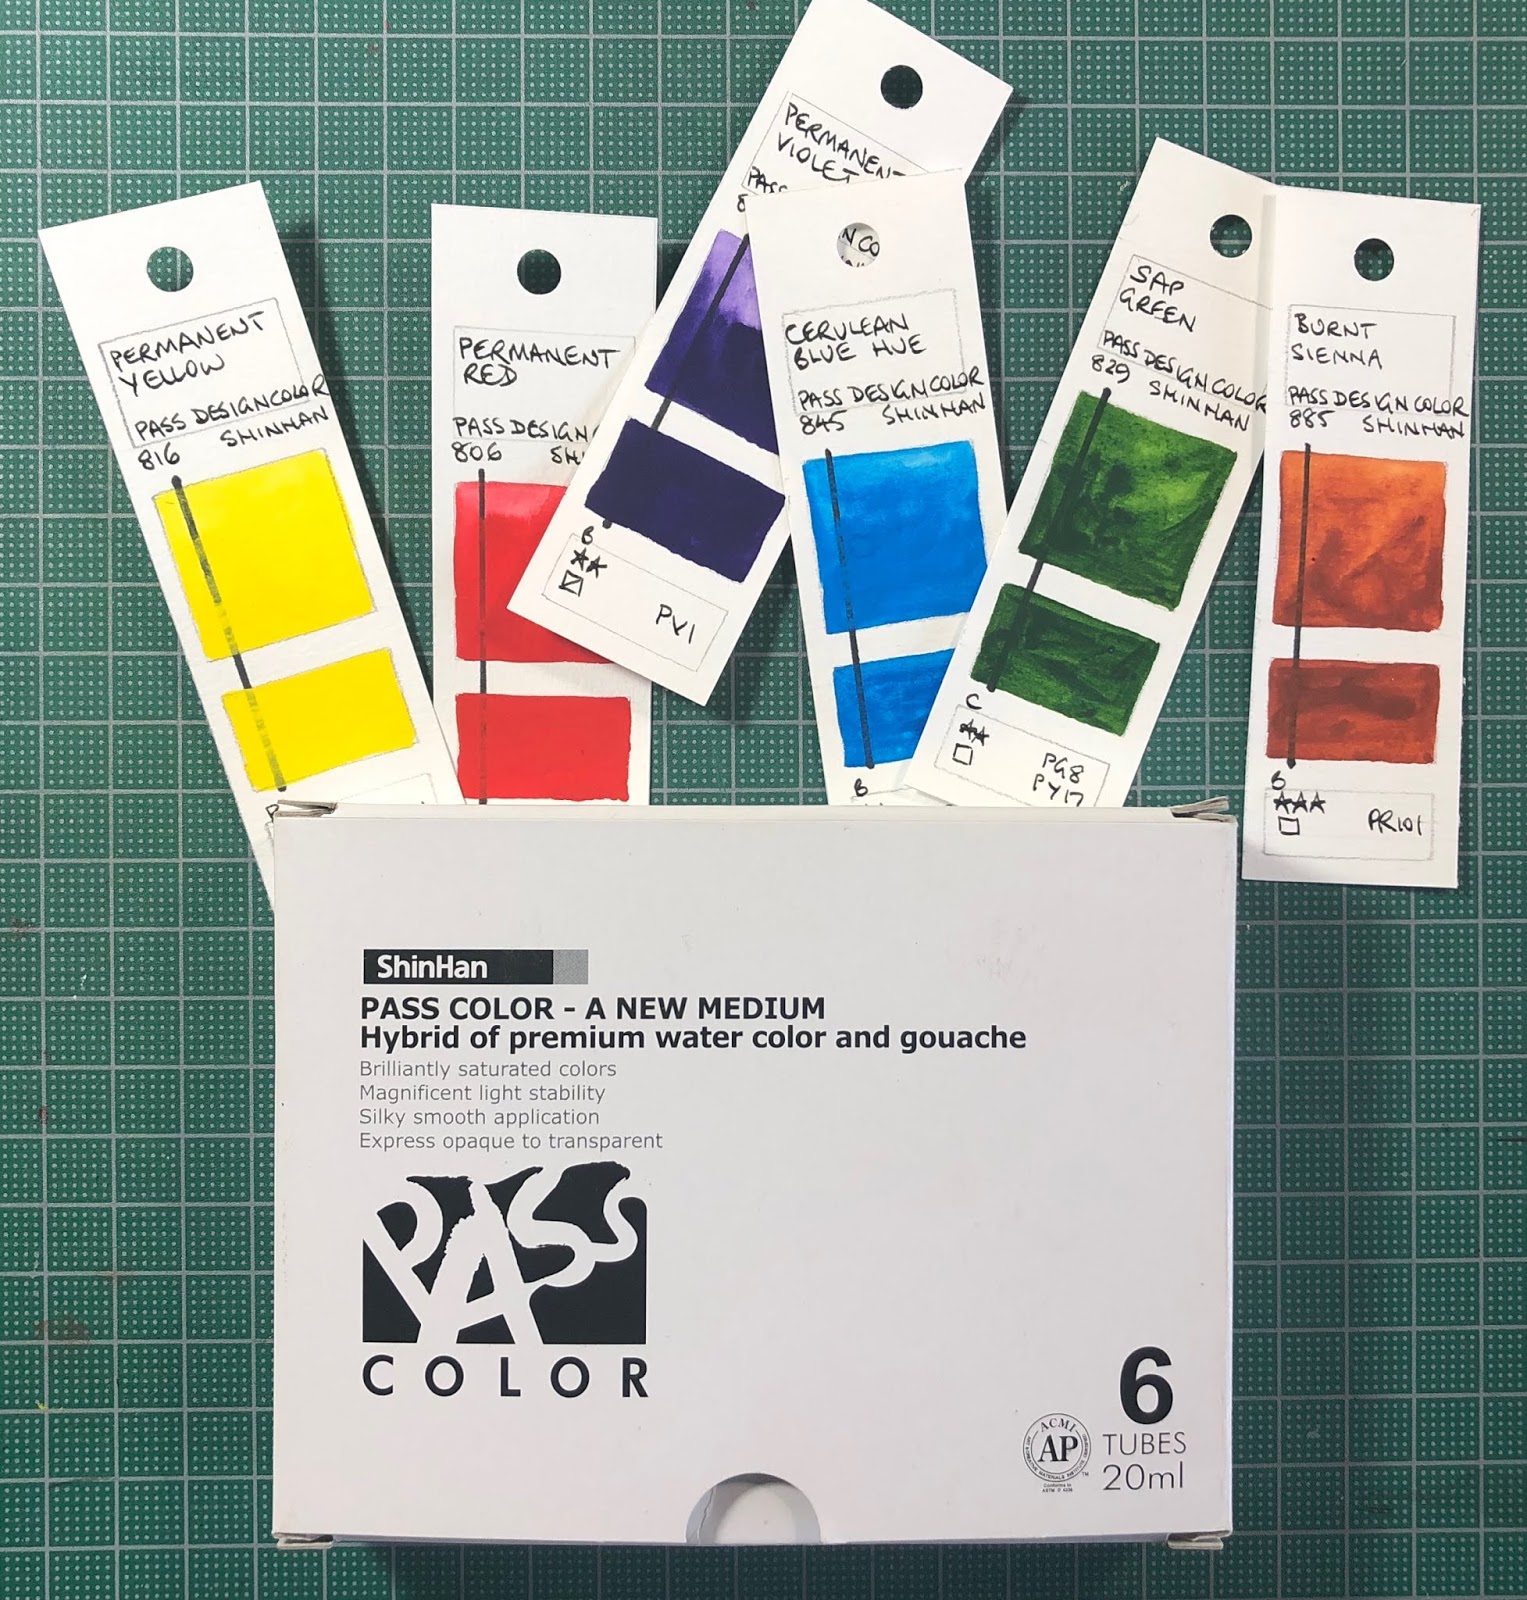 Shinhan Professional PASS Design Hybrid Watercolor Paint 20ml Tubes 48  Color Set